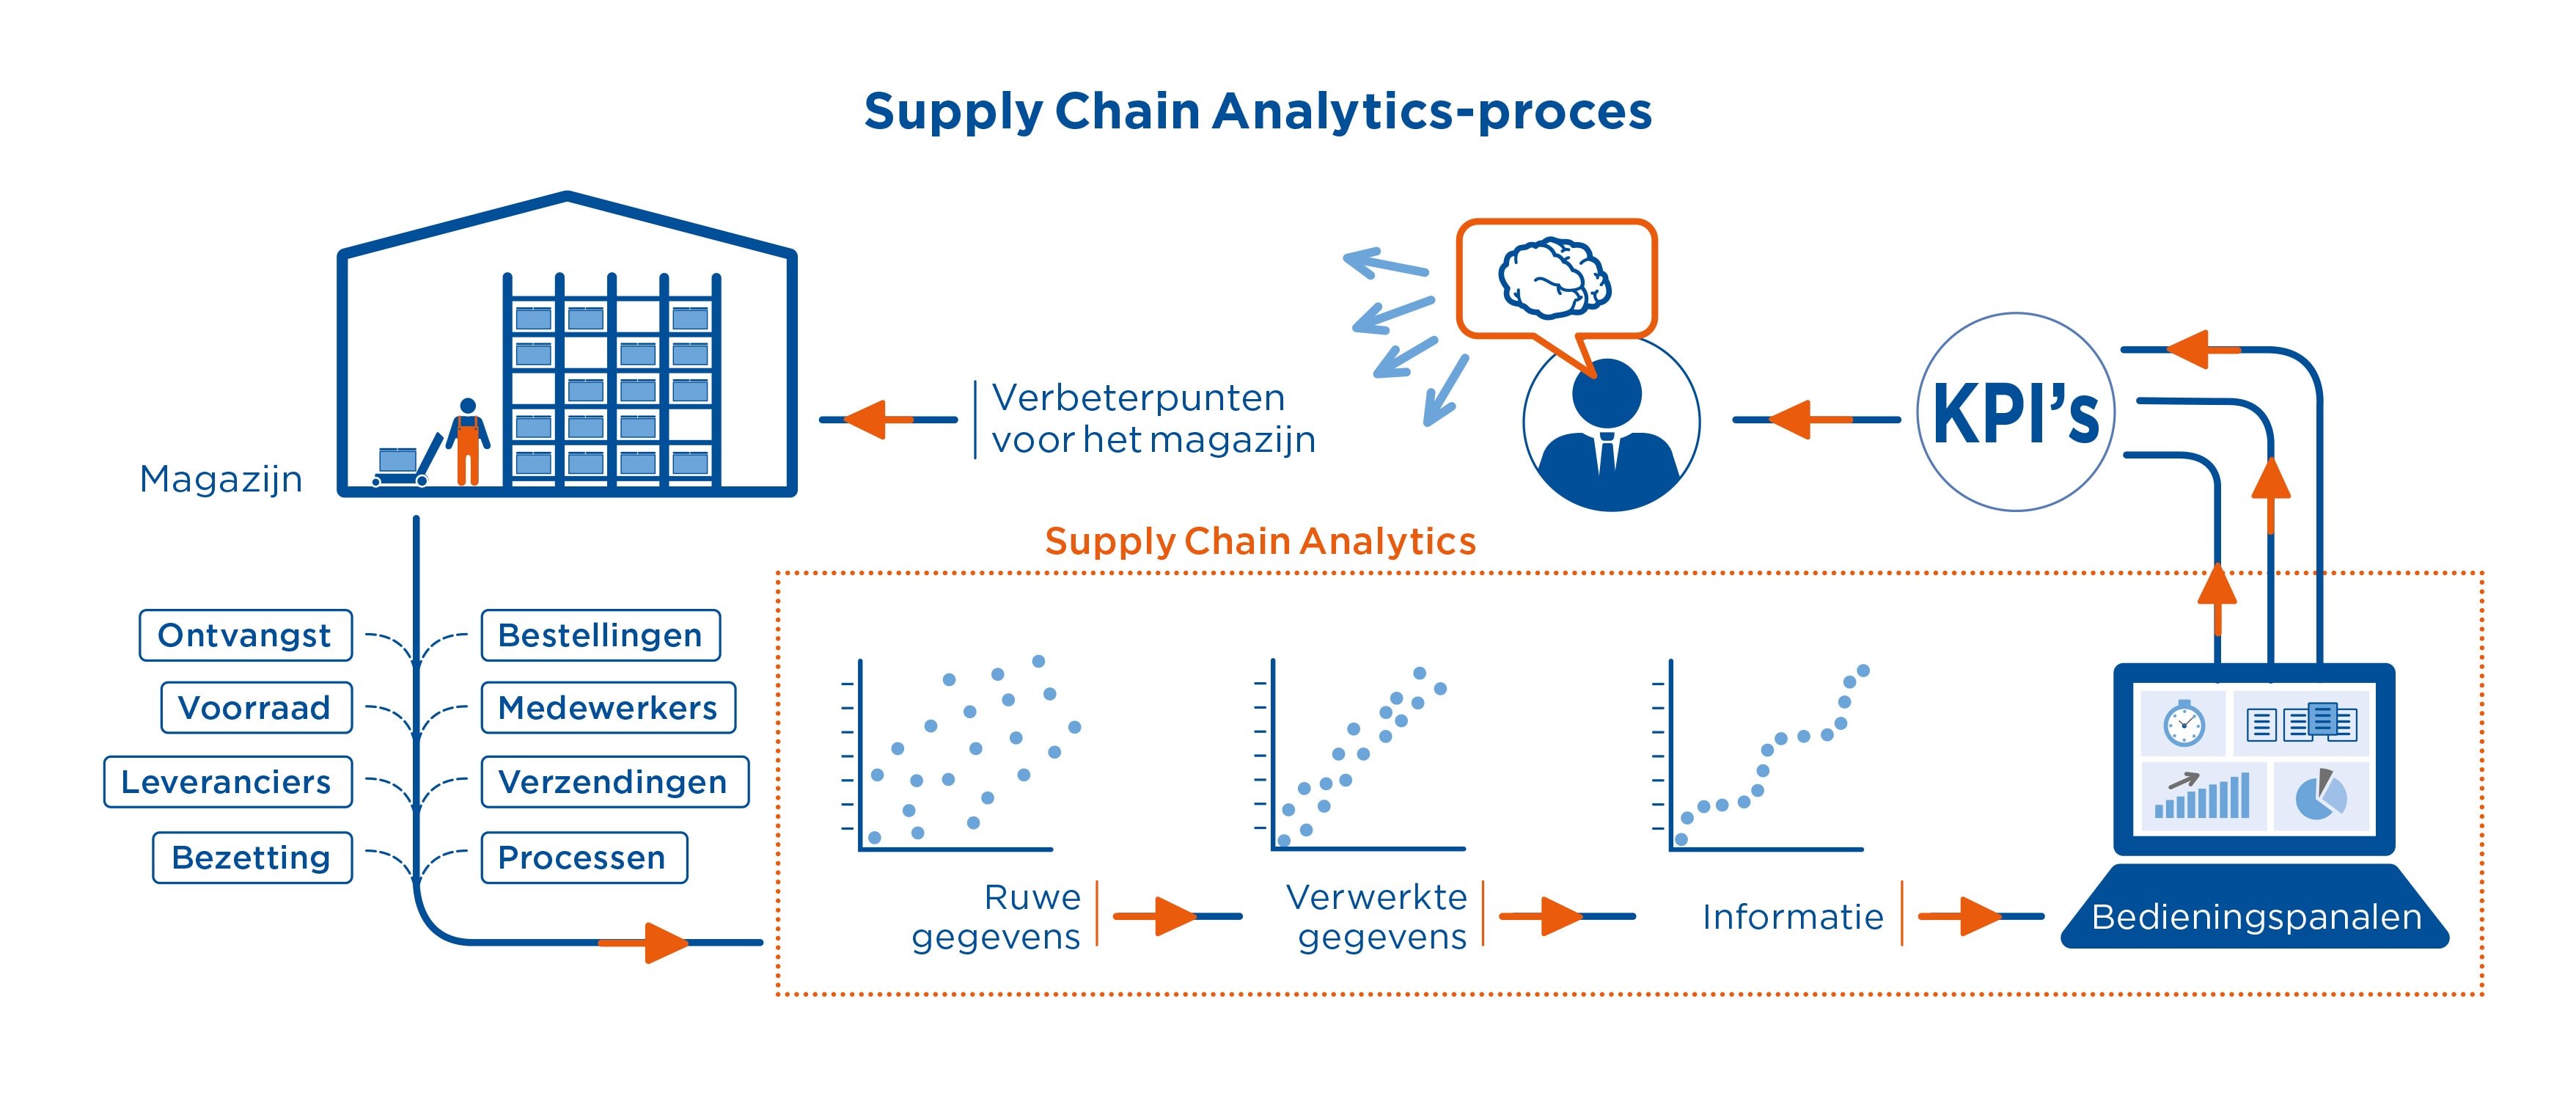 Supply Chain Analytics-proces